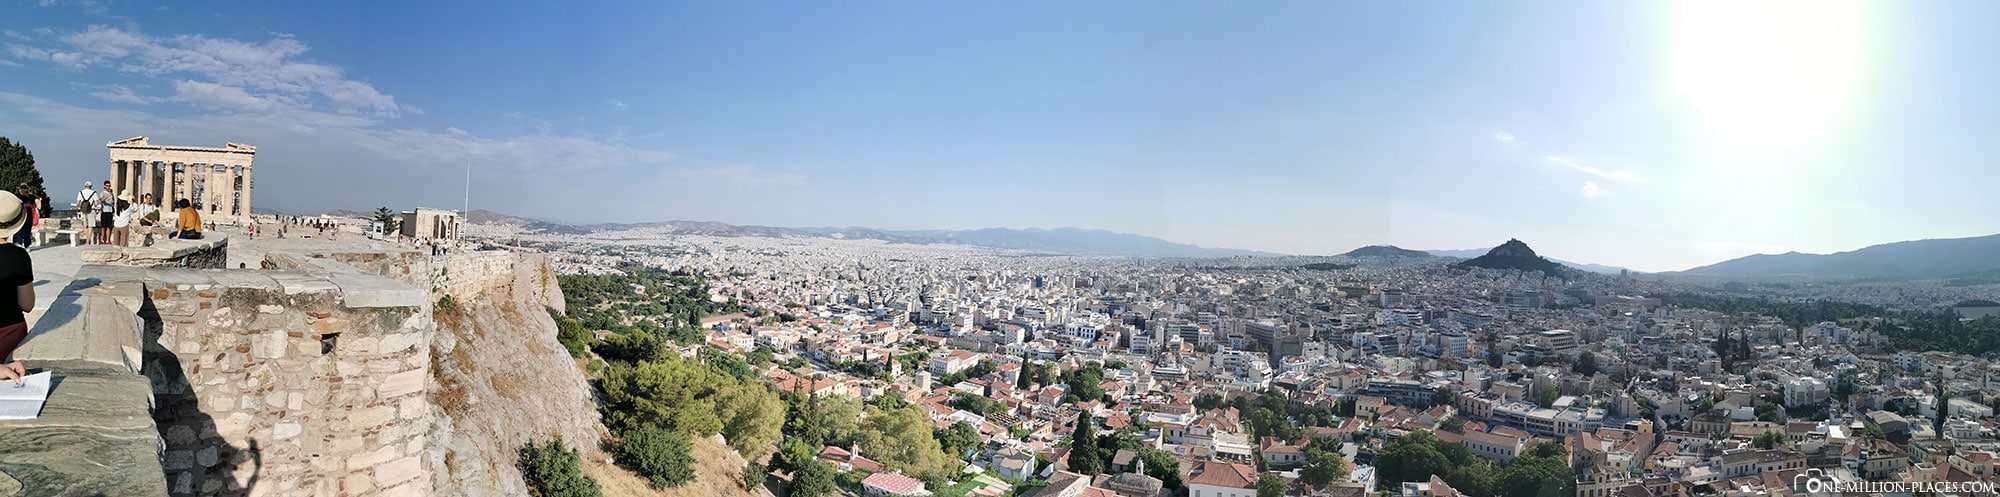 Acropolis, Athens, Panoramic Image